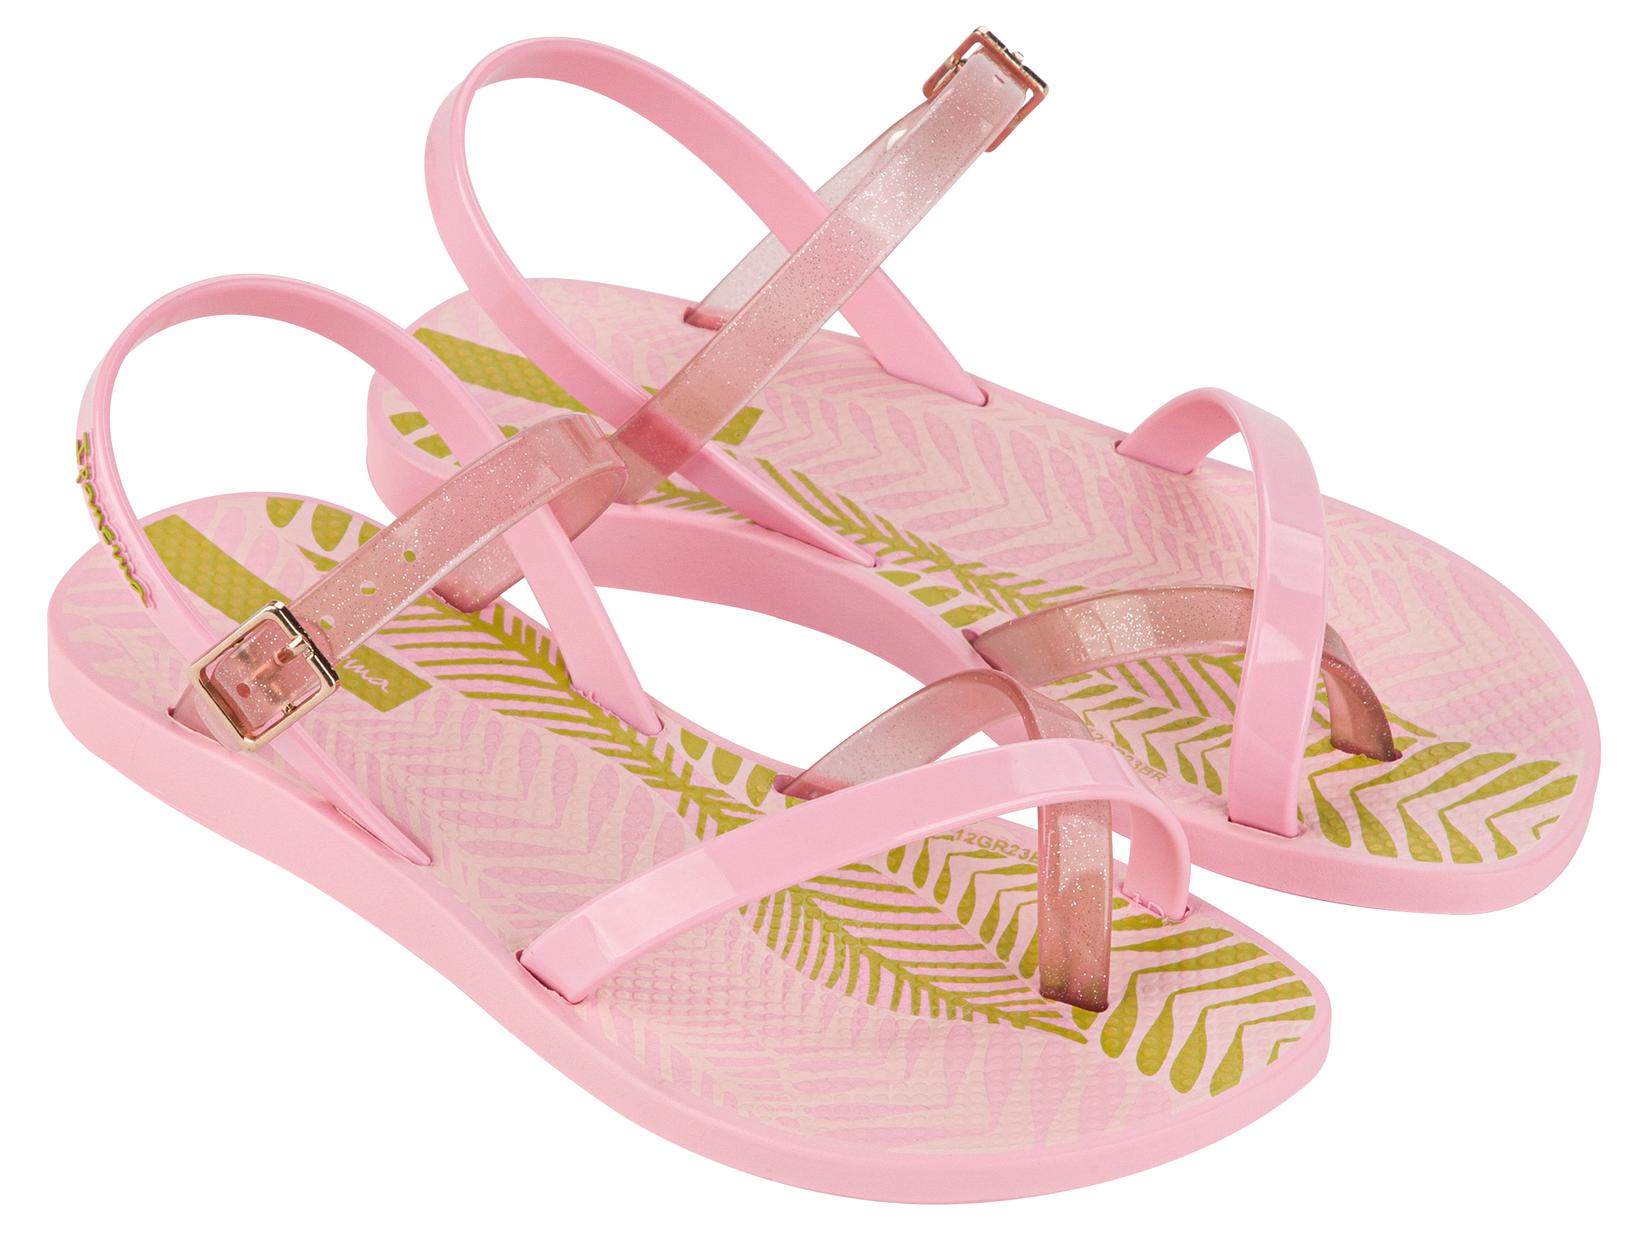 Selected image for Ipanema Sandale za devojčice 83534, Fashion Sand X, Roze